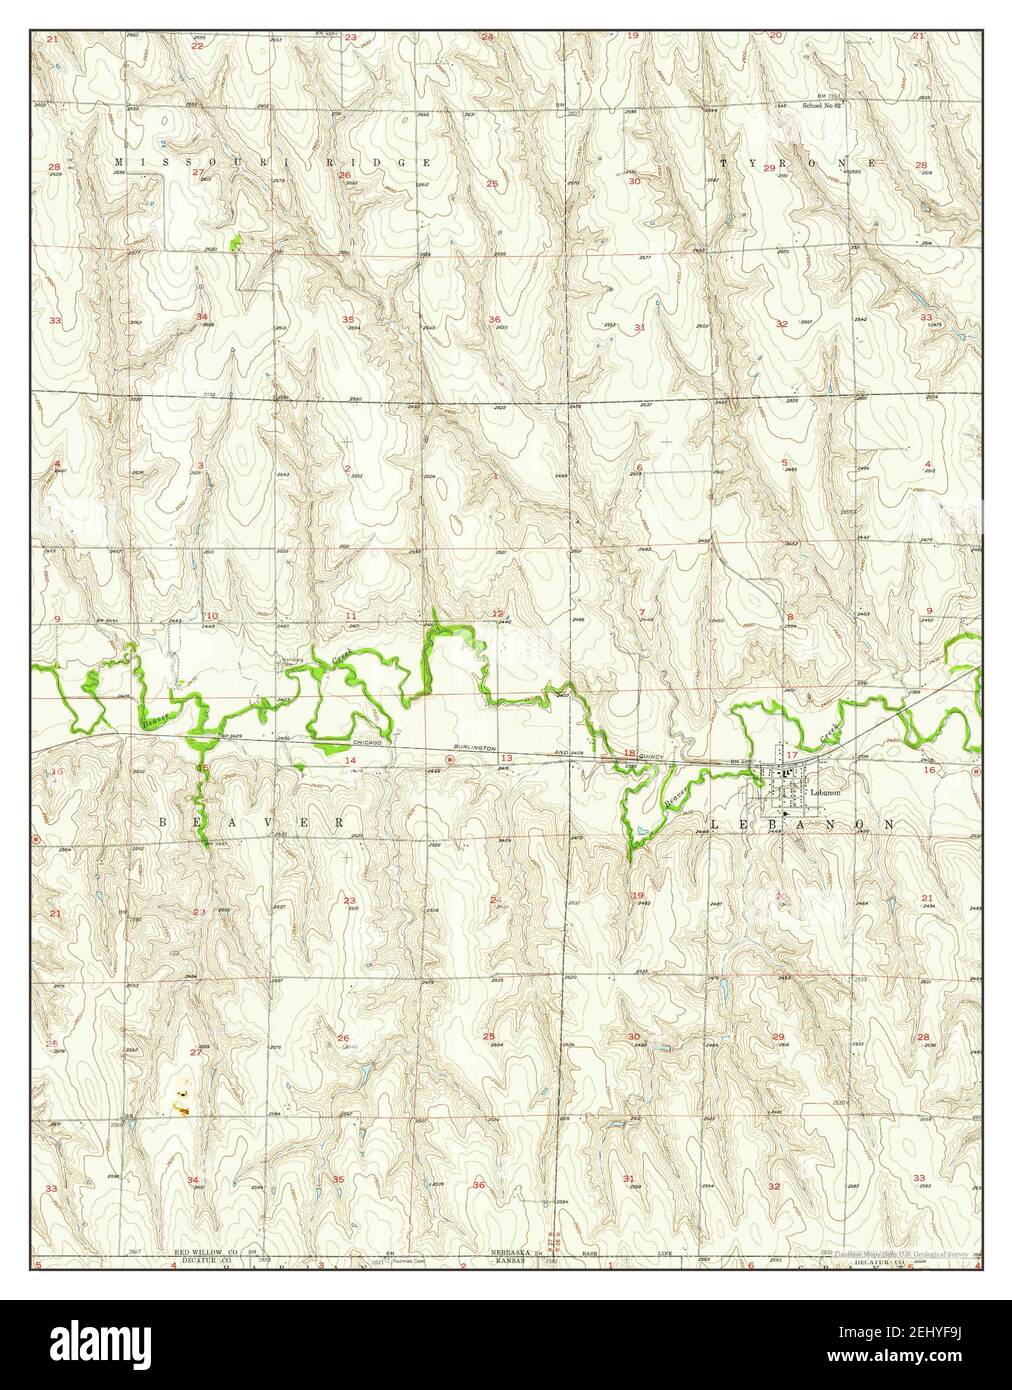 Lebanon, Nebraska, map 1957, 1:24000, United States of America by Timeless Maps, data U.S. Geological Survey Stock Photo